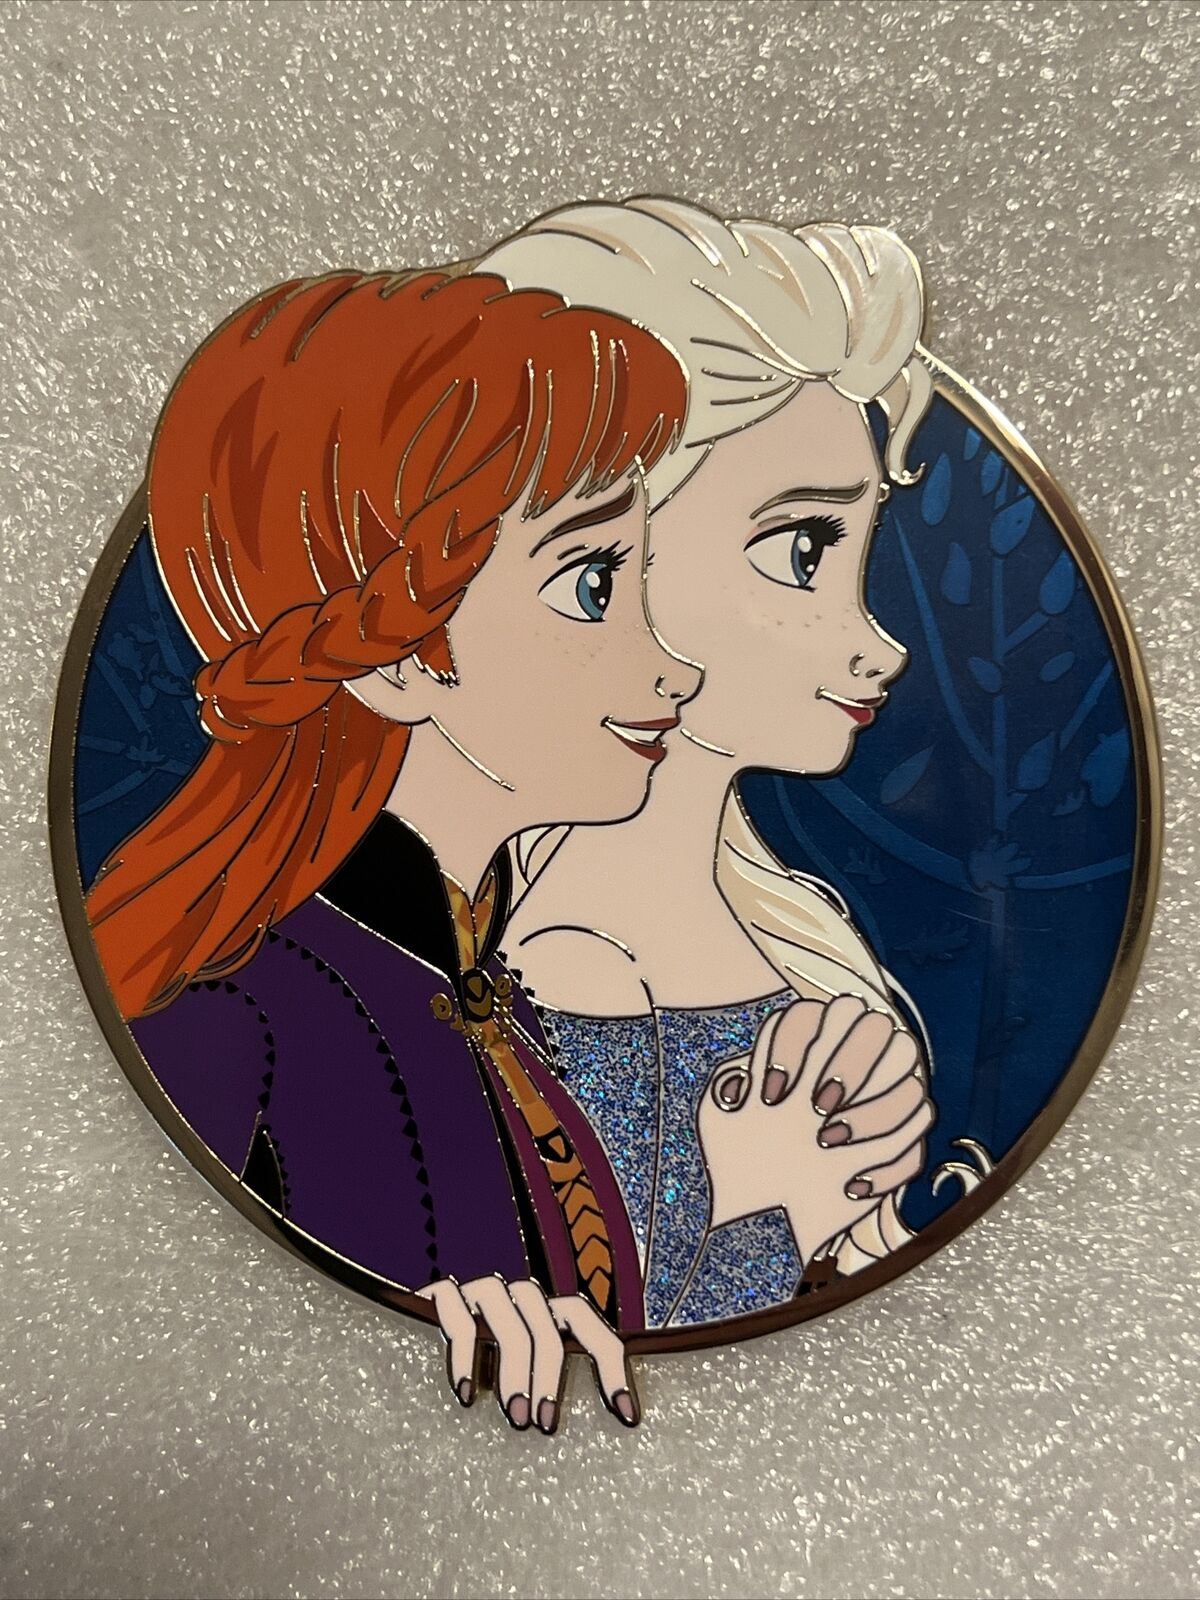 Davinci Fantasy Pins - Together - Anna & Elsa - Frozen - LE75 - SHIPS FREE